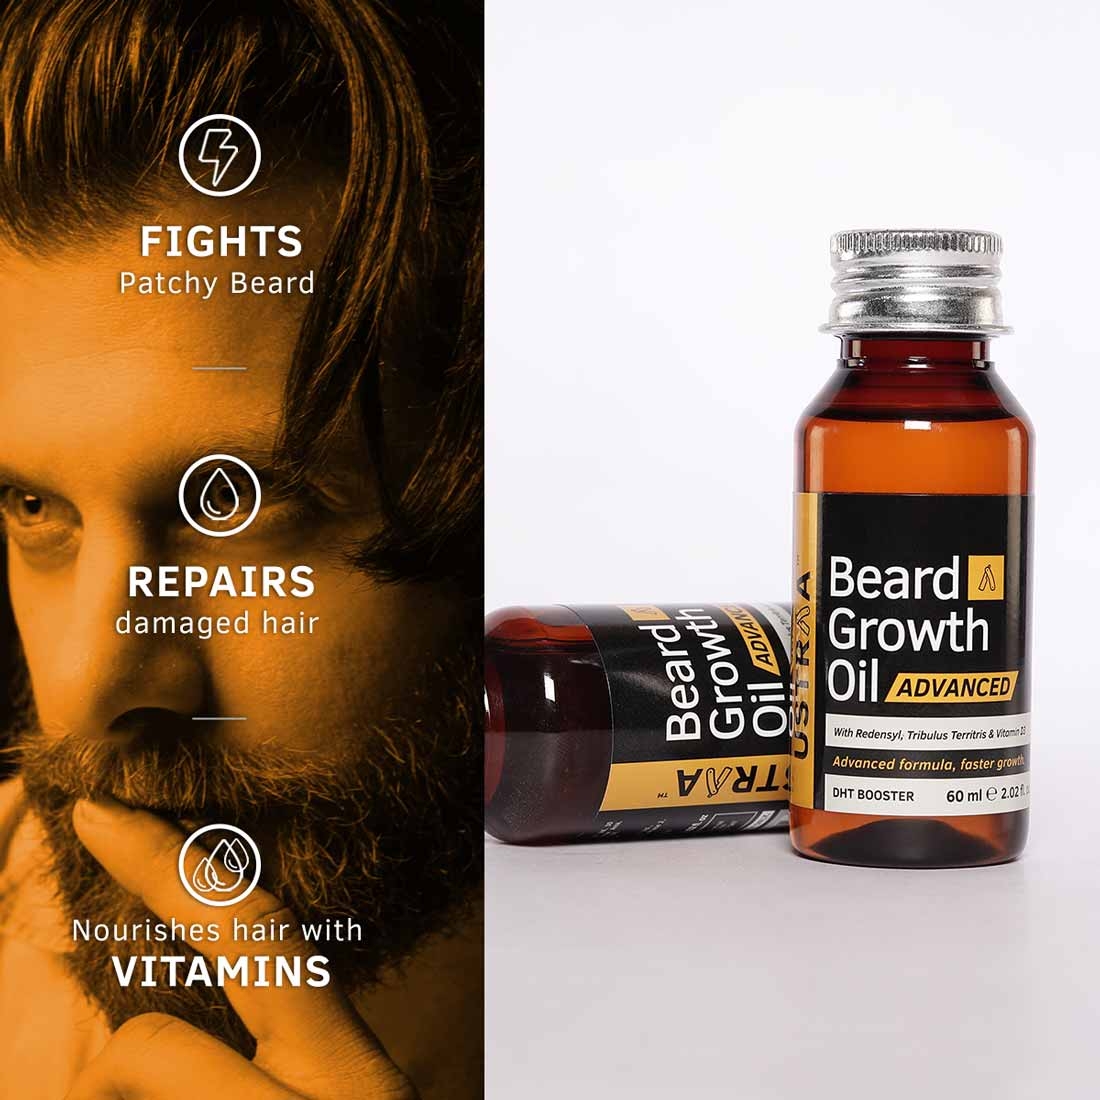 Ustraa | Ustraa Ayurvedic Beard Growth Oil -100ml & Beard Growth Oil Advanced - 60ml 2